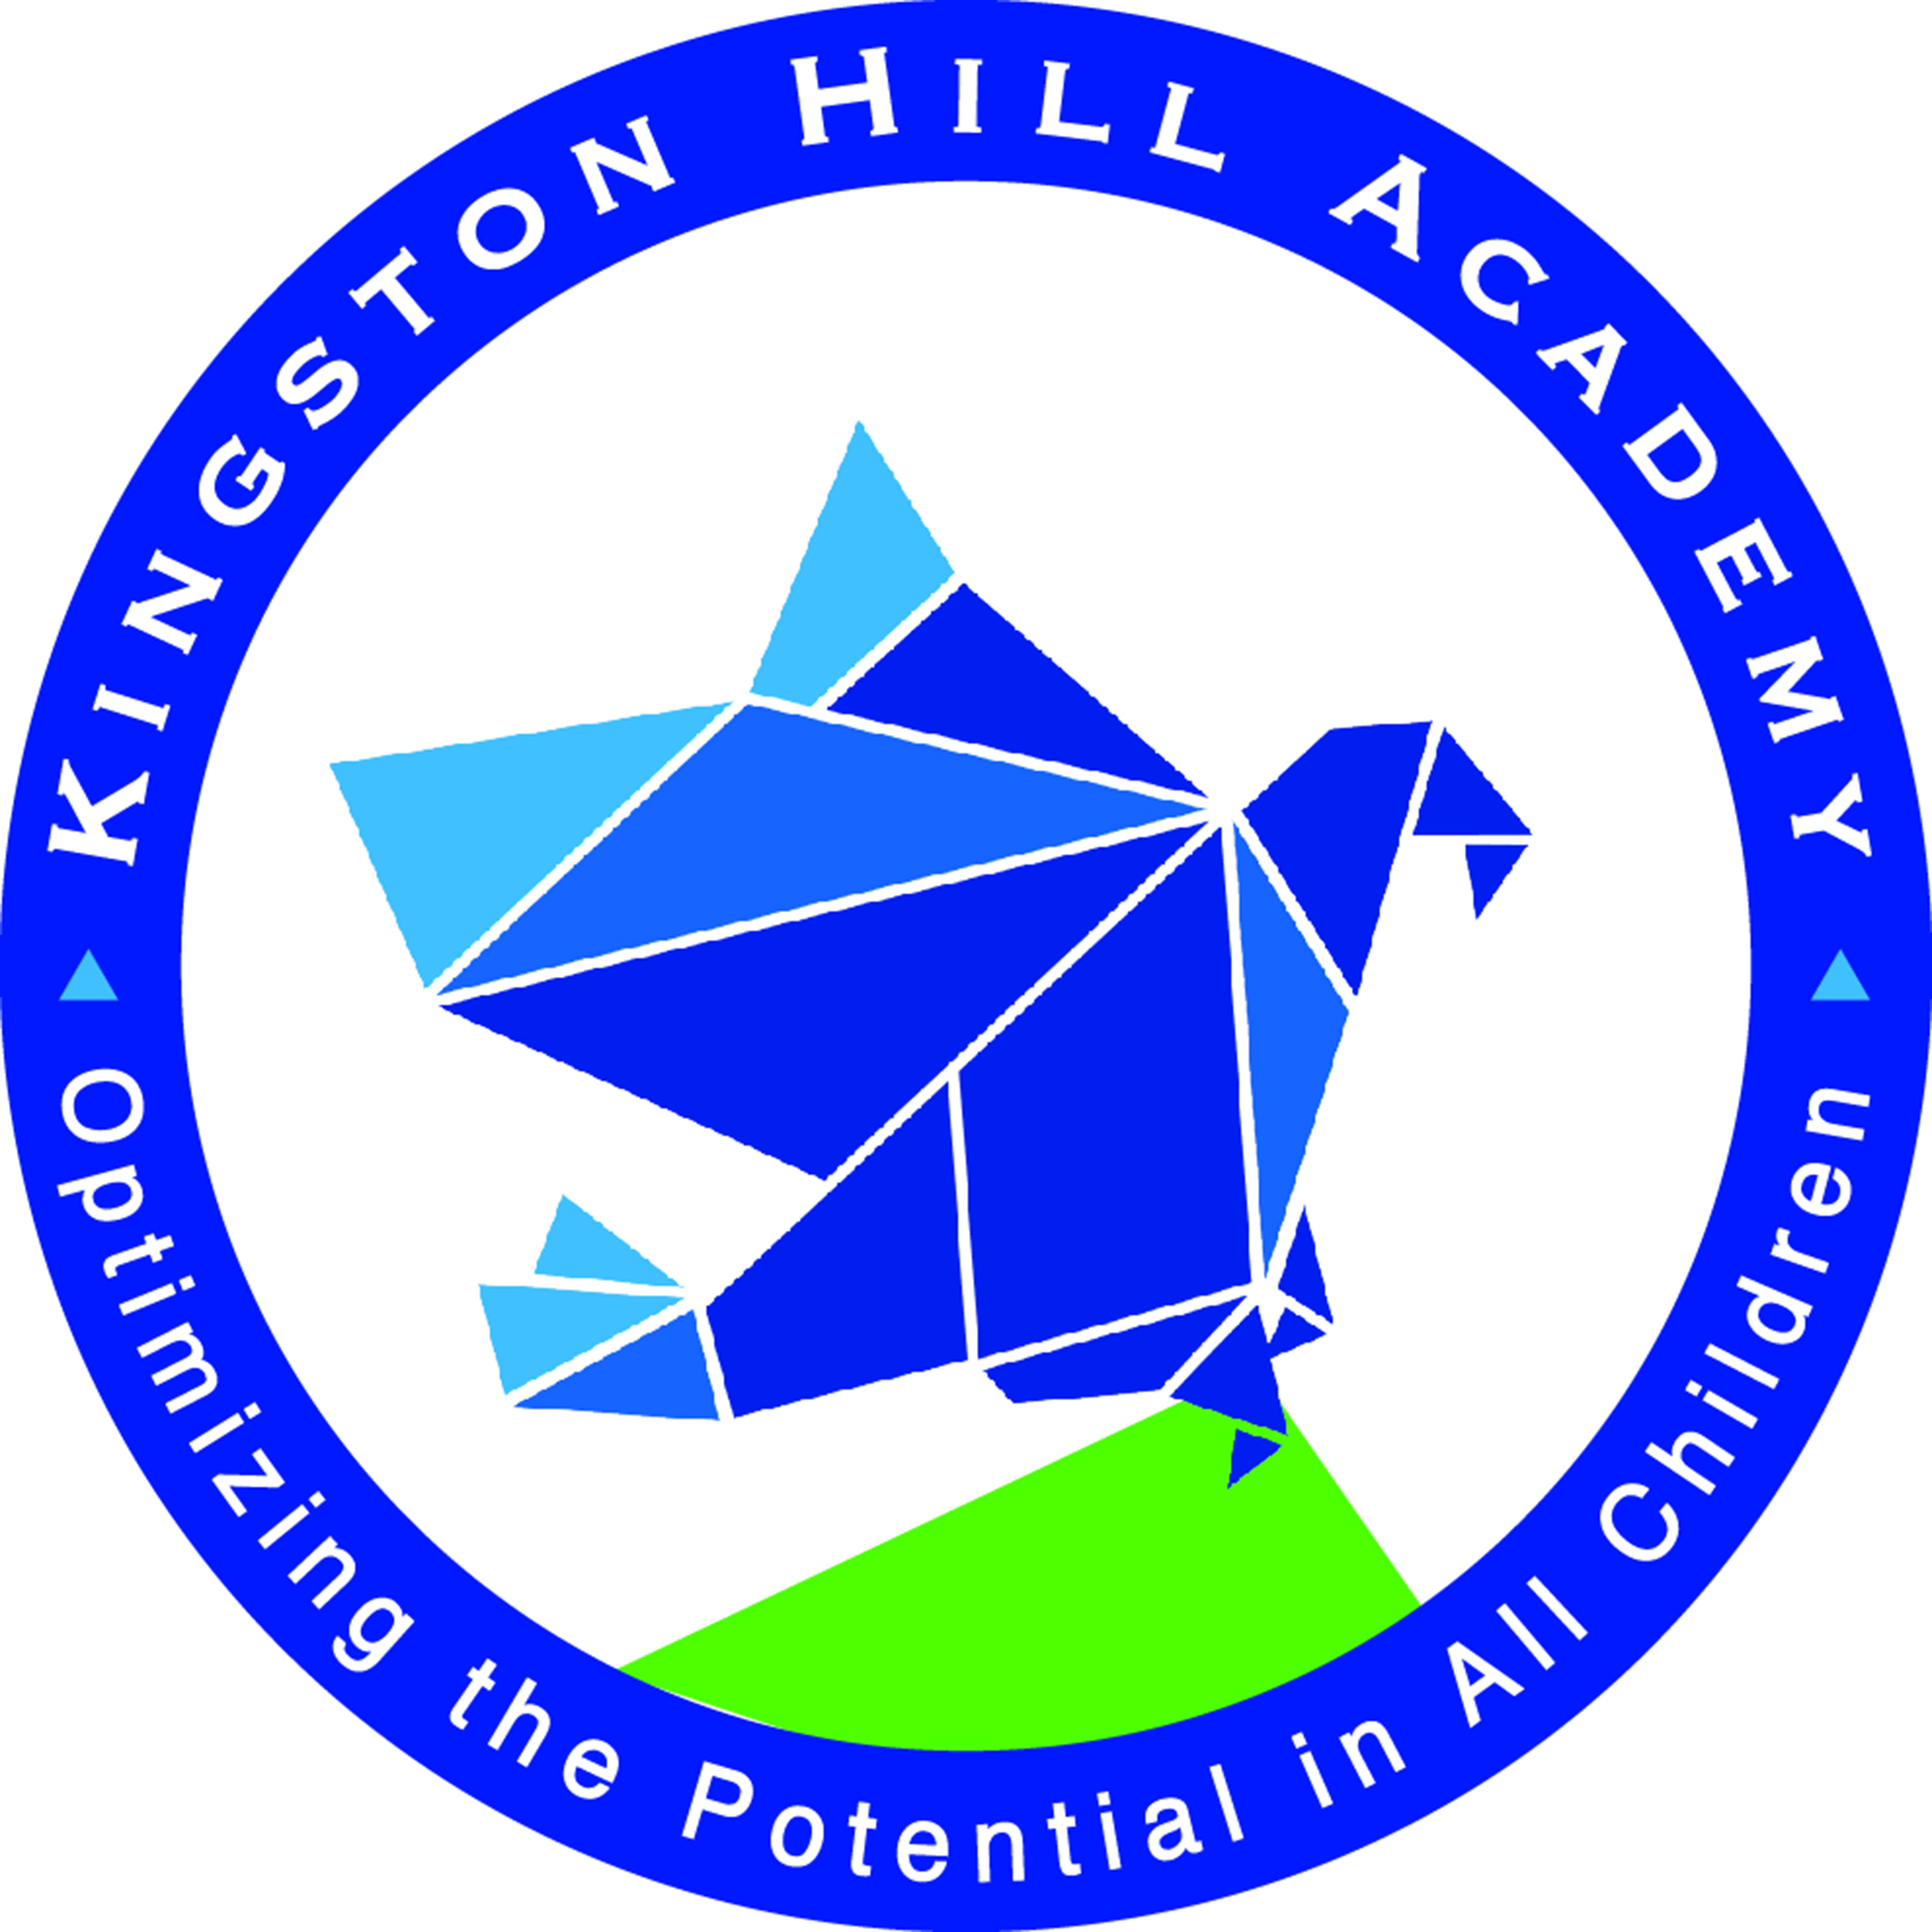 Kingston Hill Academy